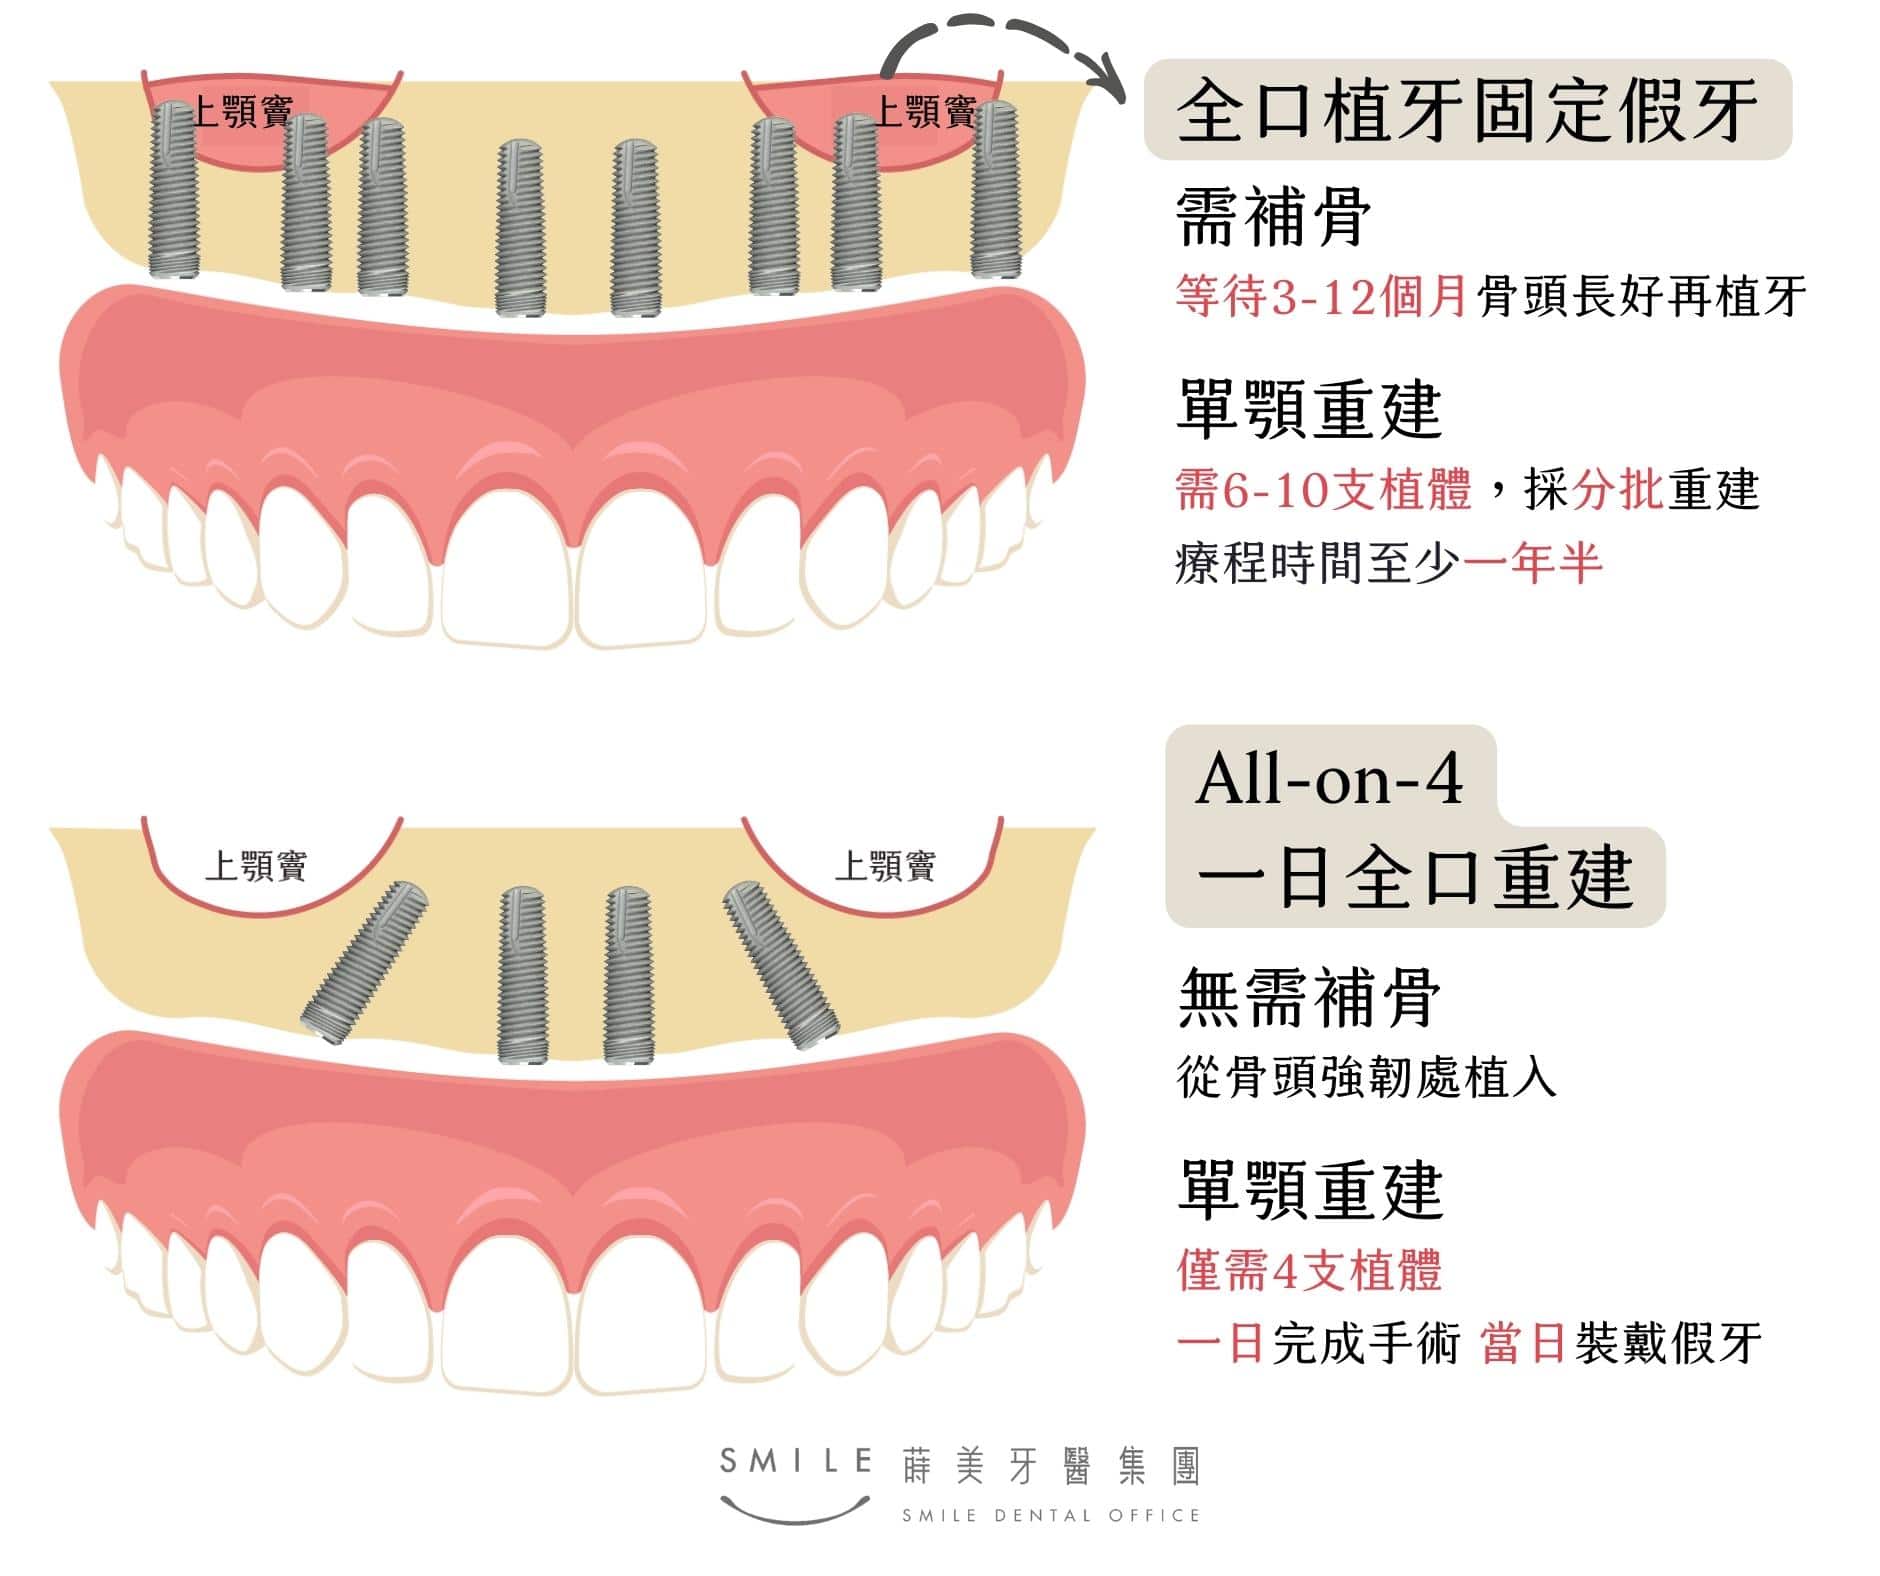 All-on-4速定式植牙 (1)